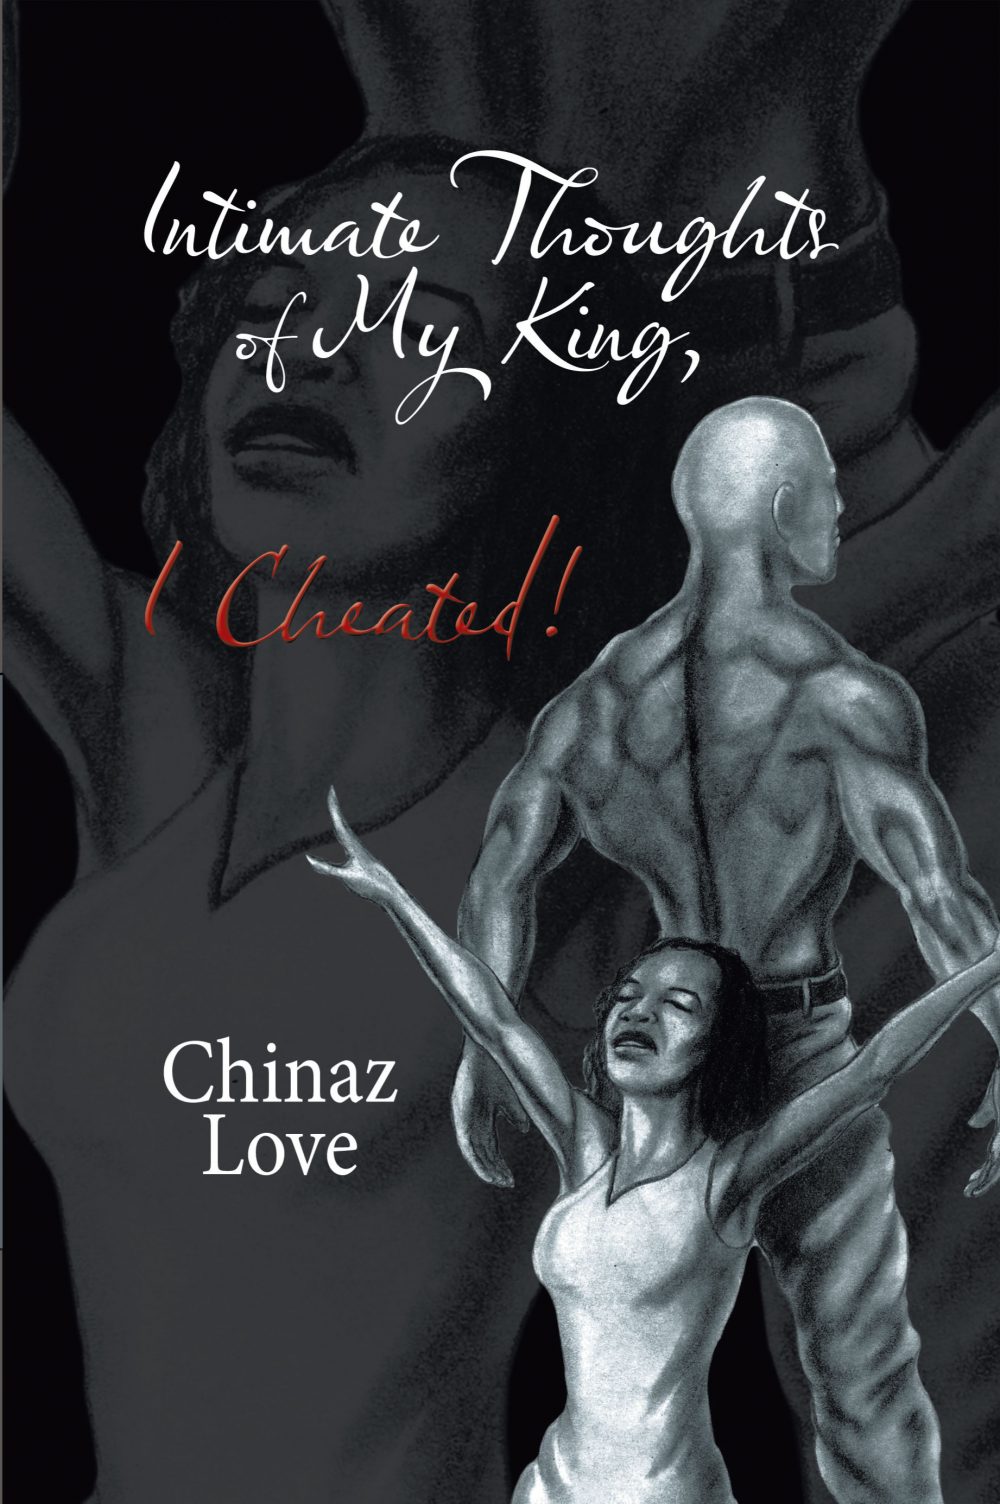 Chinaz Love